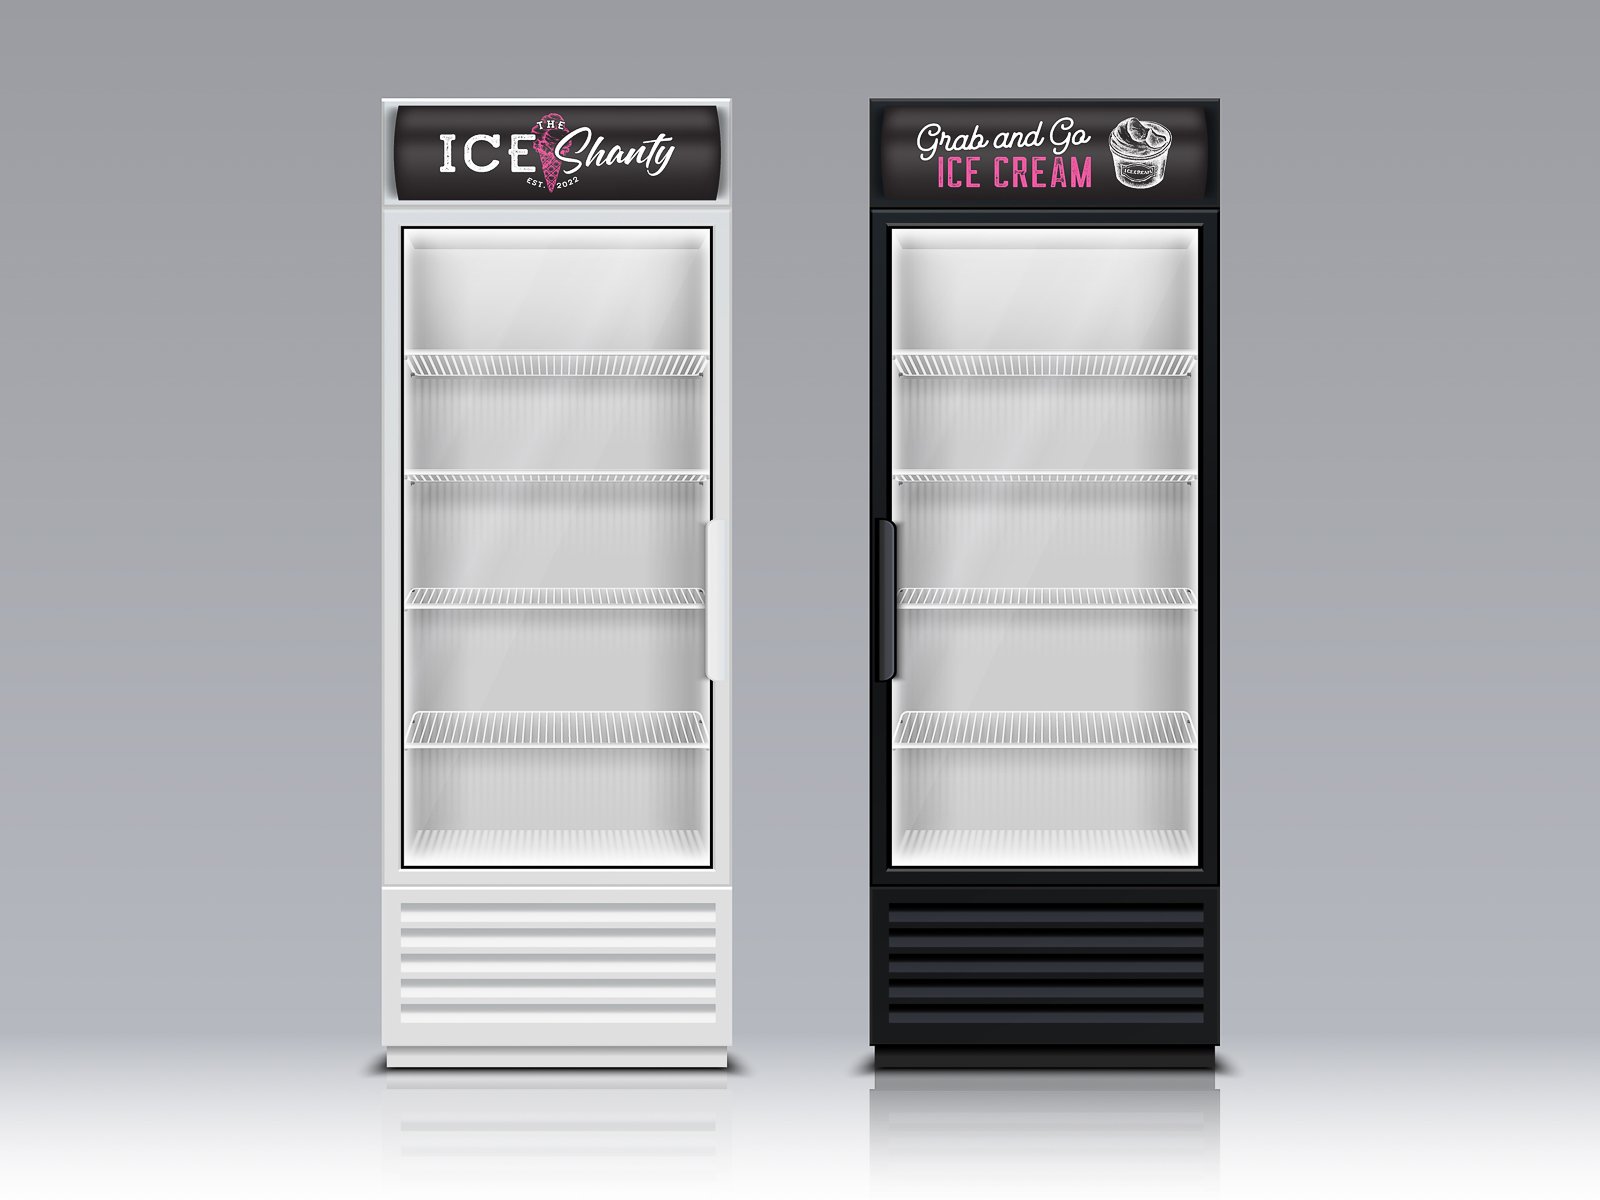 Freezer panels were designed and repurposed.